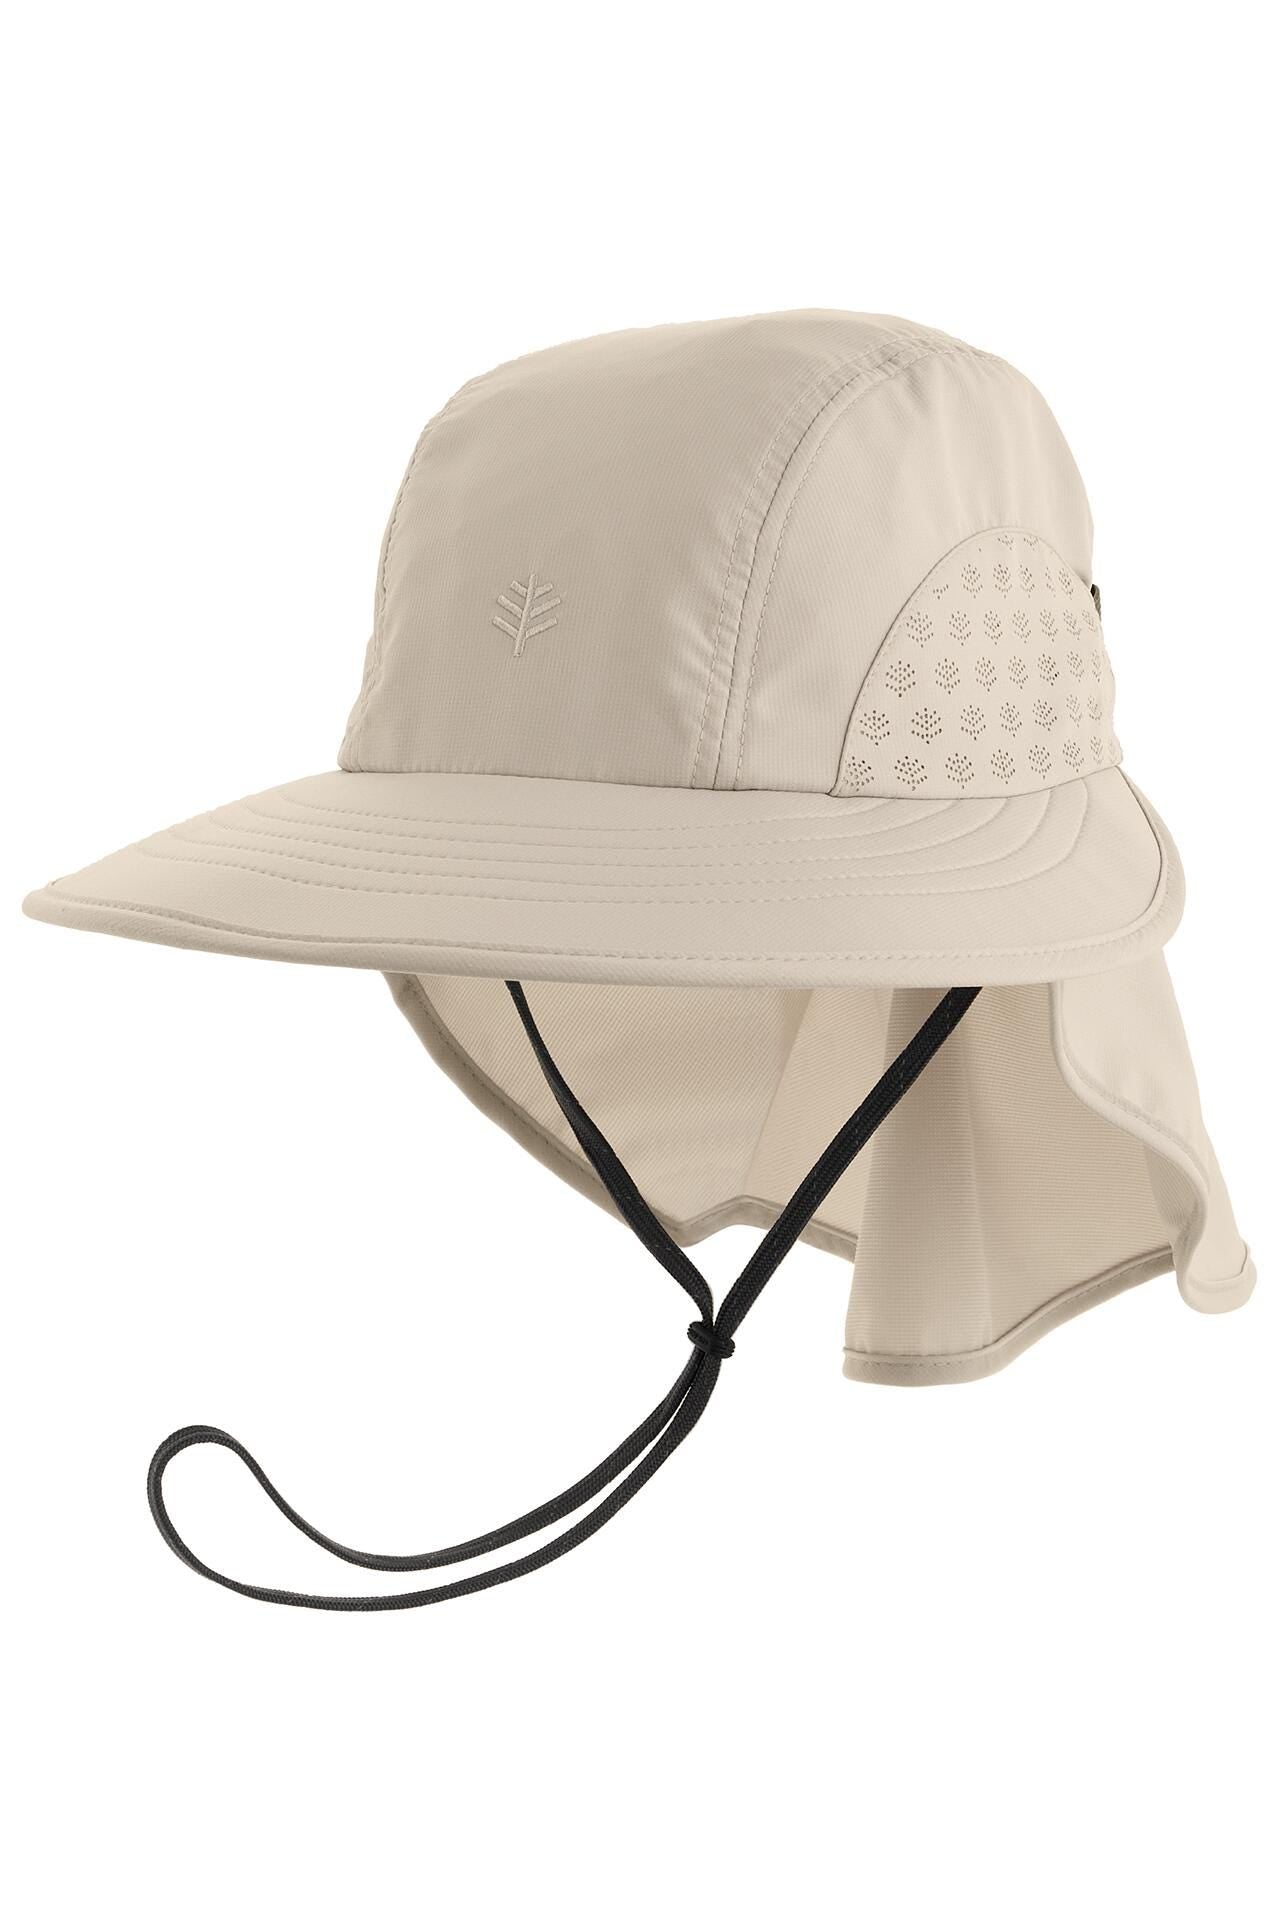 Coolibar Explorer Hat UPF 50+, Stone / L/XL